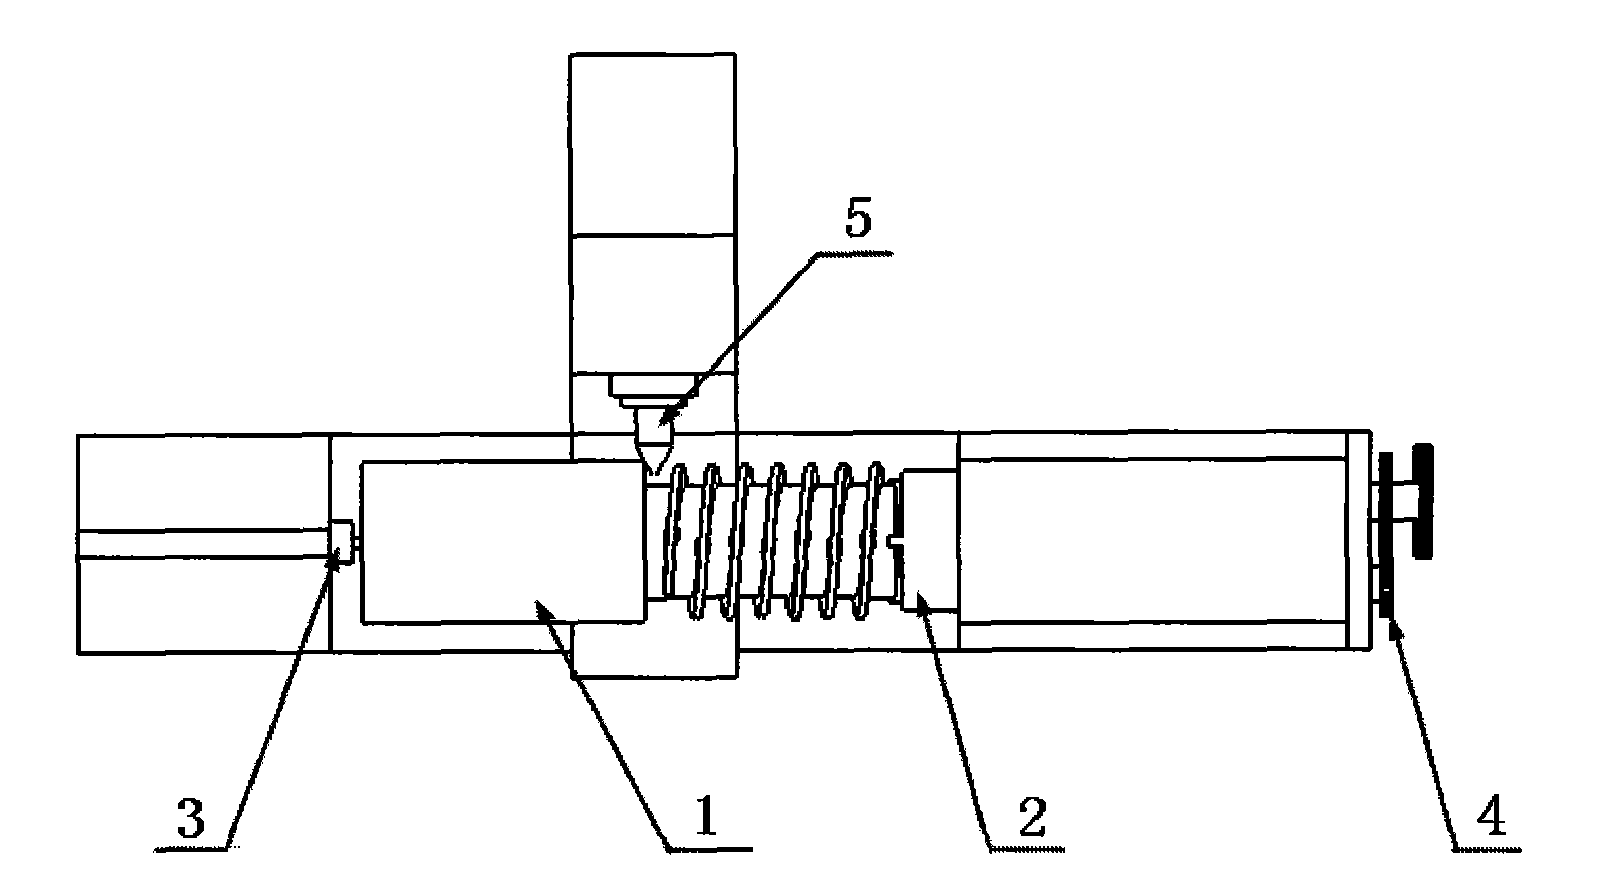 Turning-milling linkage machining method of large-pitch worm